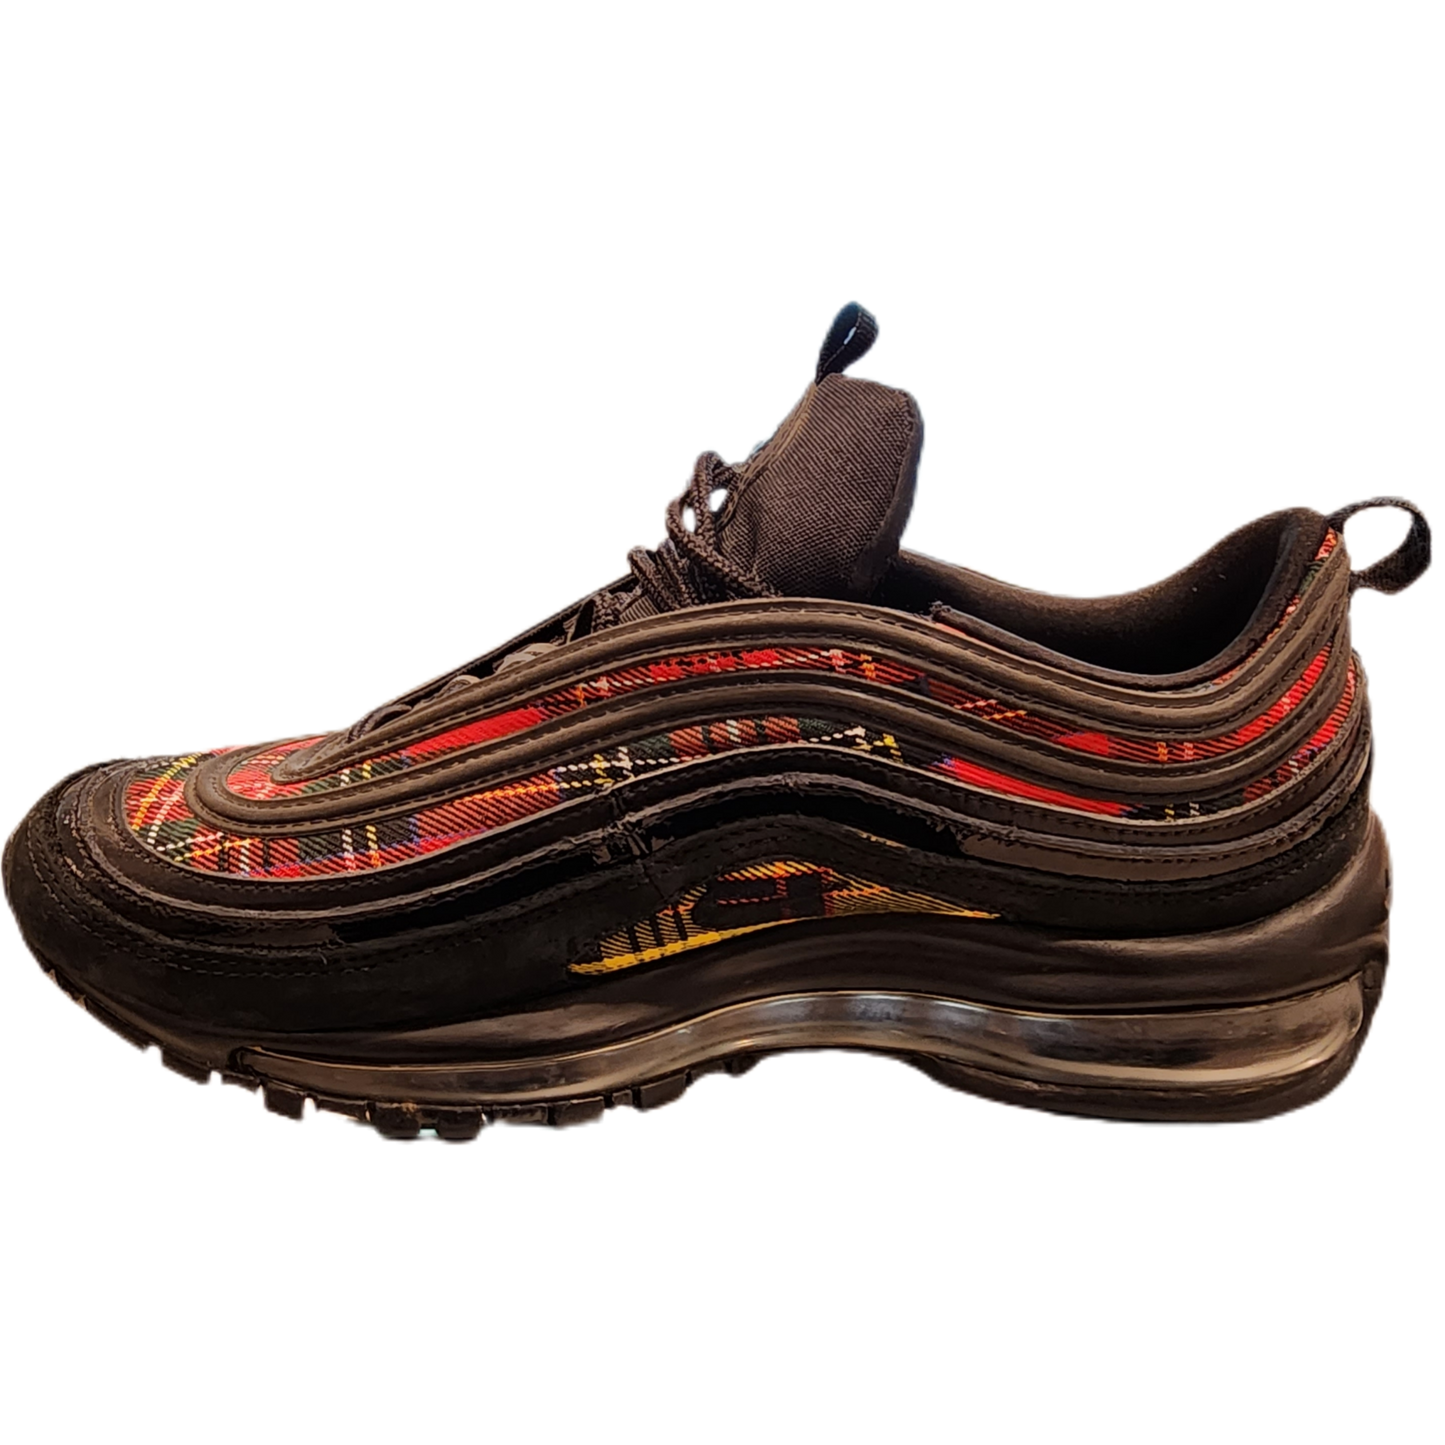 Nike - "Air Max 97 Tartan Black" - Size 7